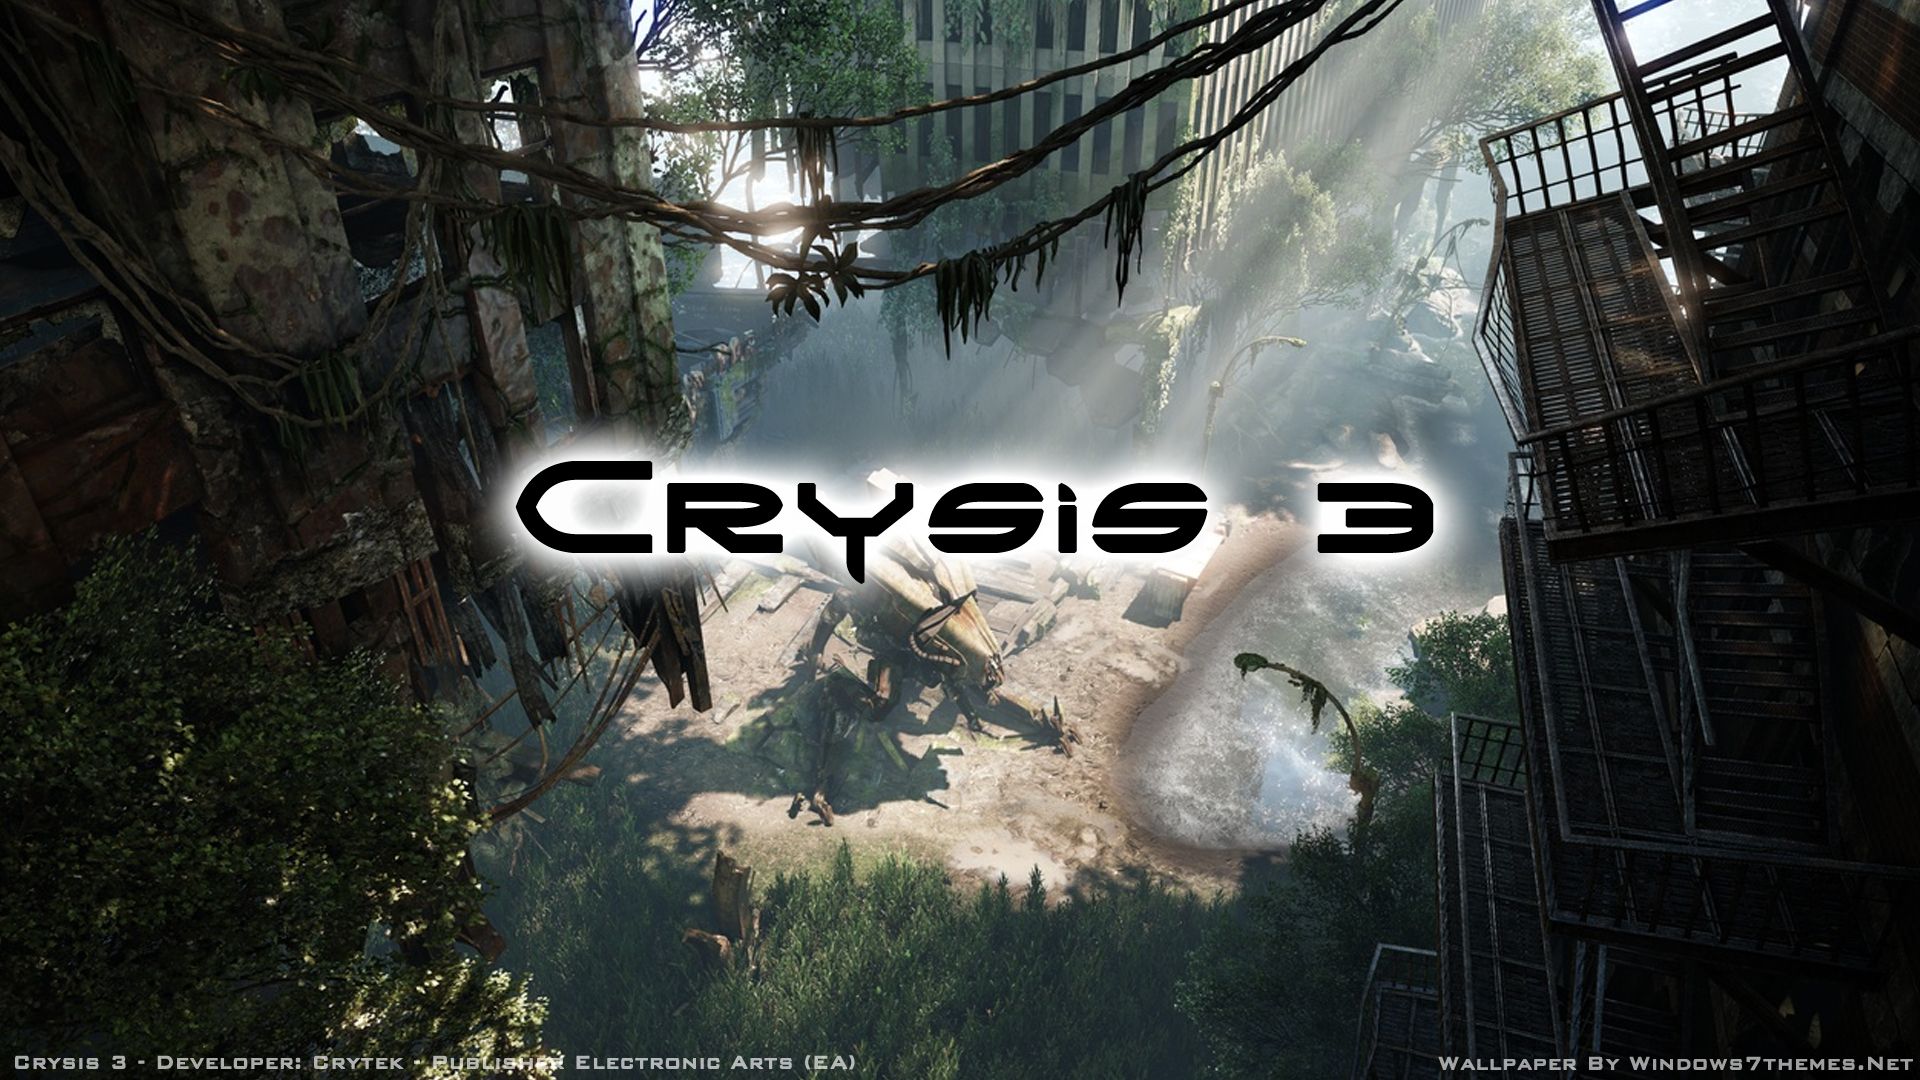 Crysis 3 wallpaper hd 2